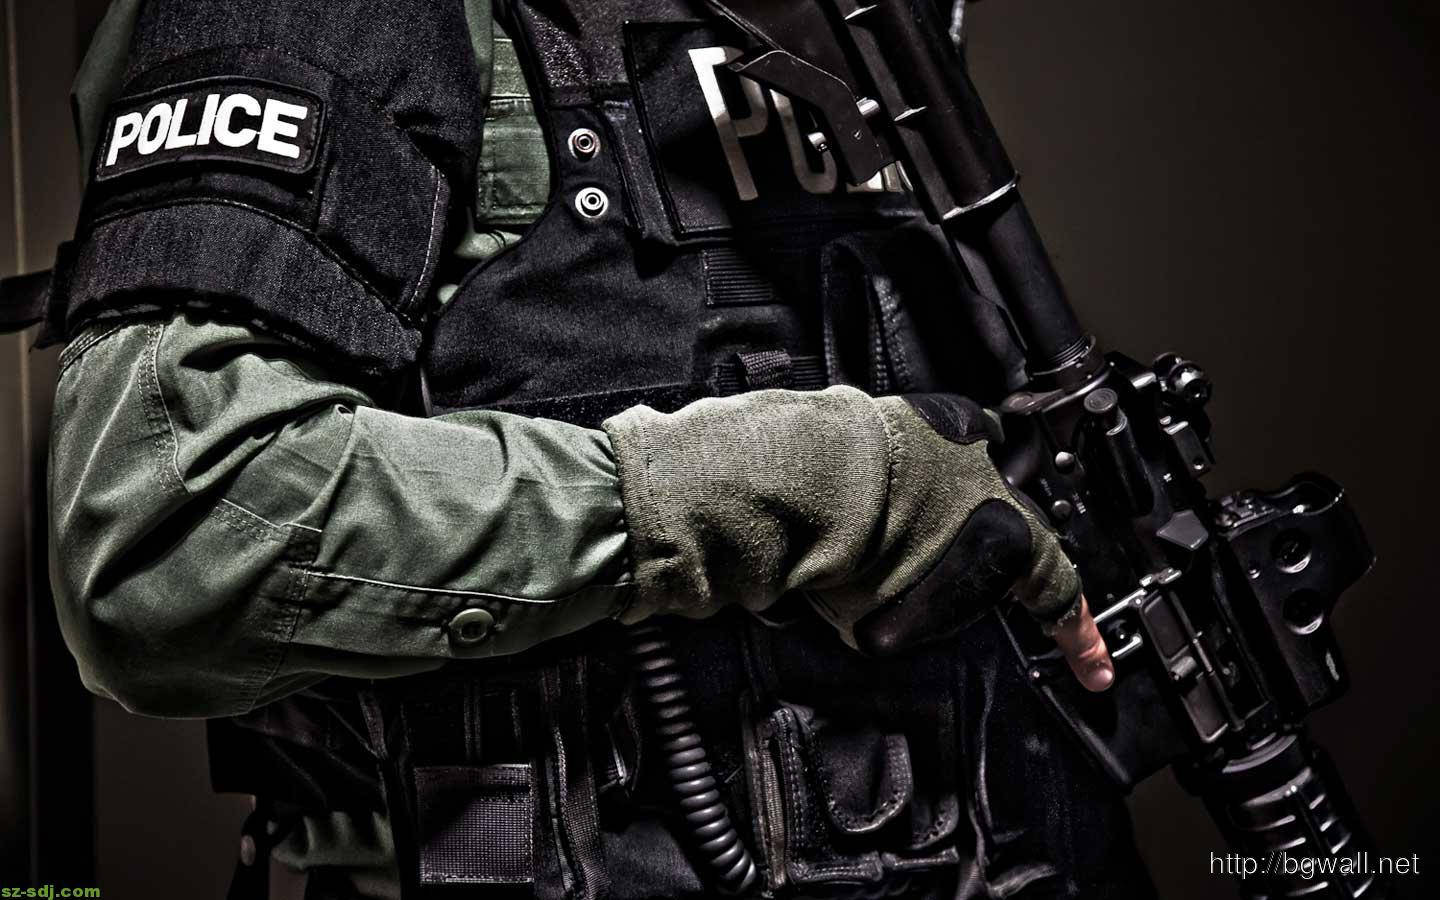 Police Vest And Gun